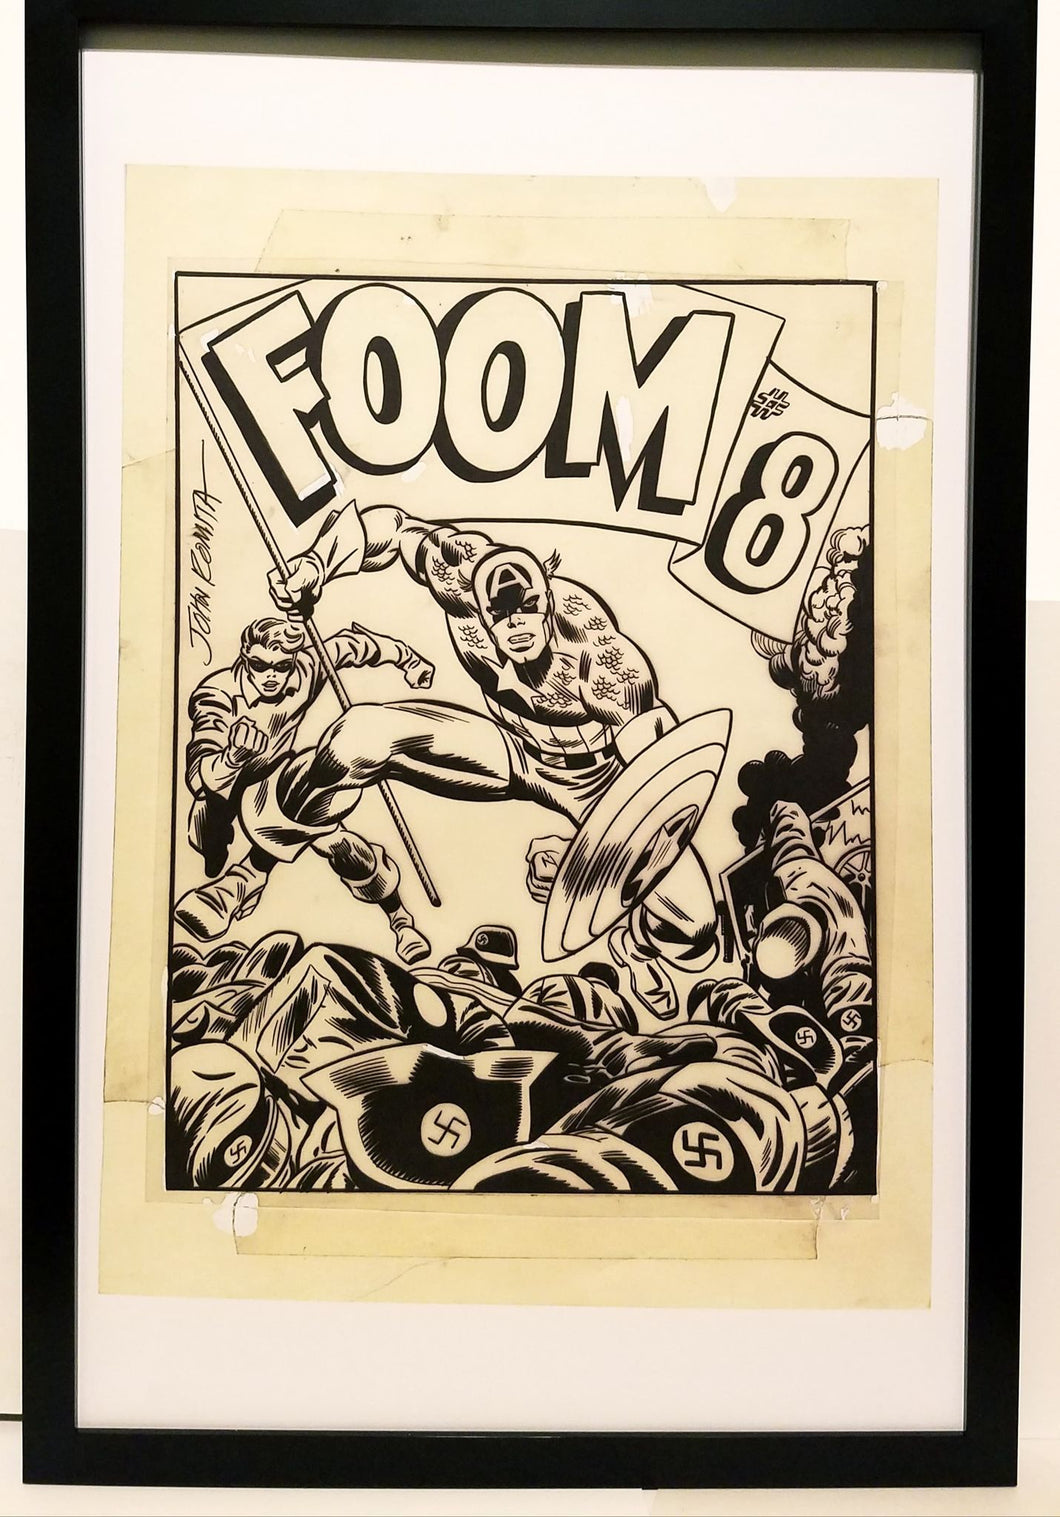 Foom #8 Captain America by John Romita 11x17 FRAMED Original Art Poster Marvel Comics